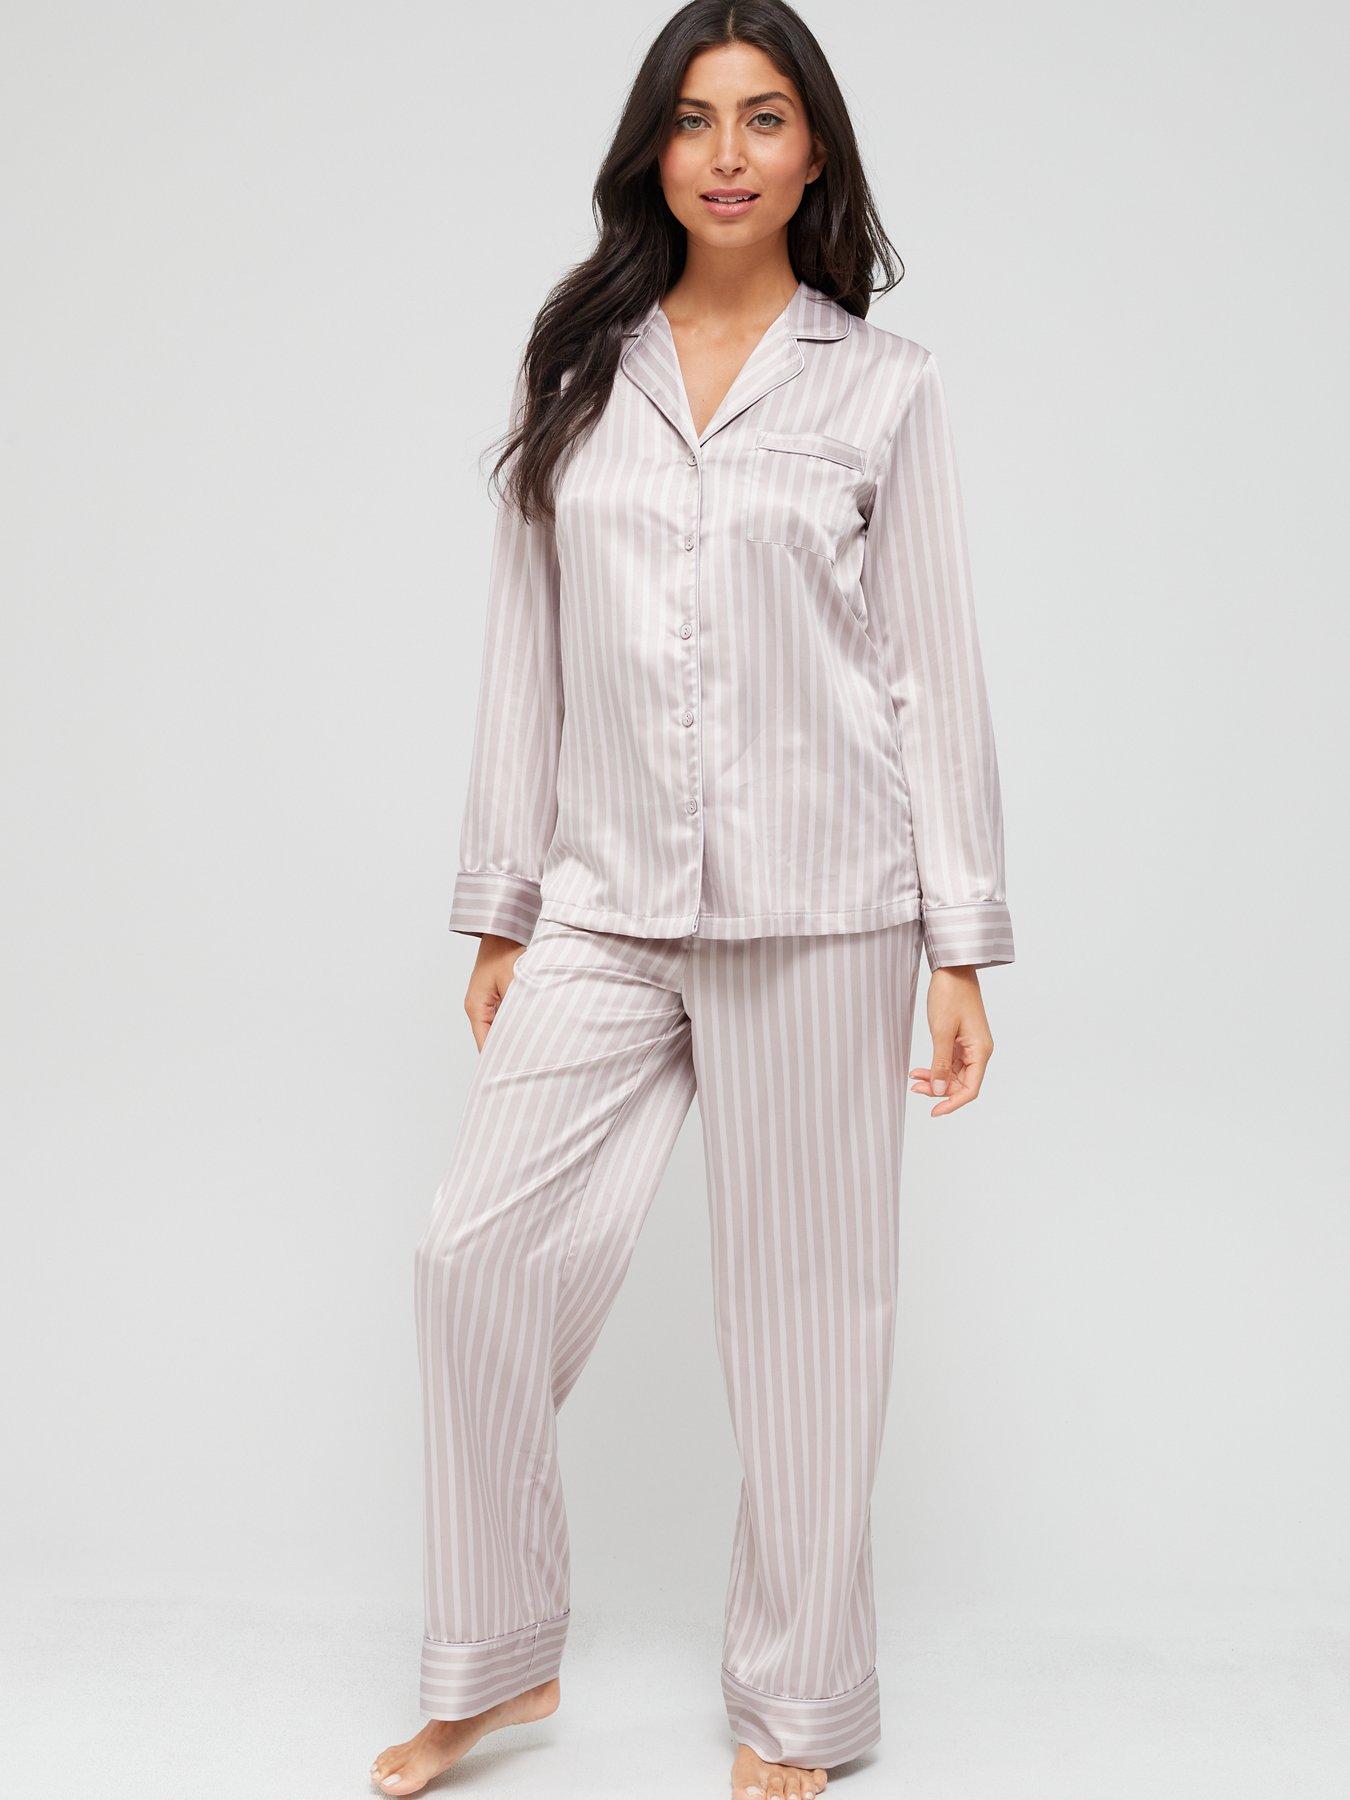 Ladies Official Character Pyjamas Pyjama Set Pjs Nightwear Lounge Bottoms Cuffed T Shirt Womens Gift Sizes 8-22 